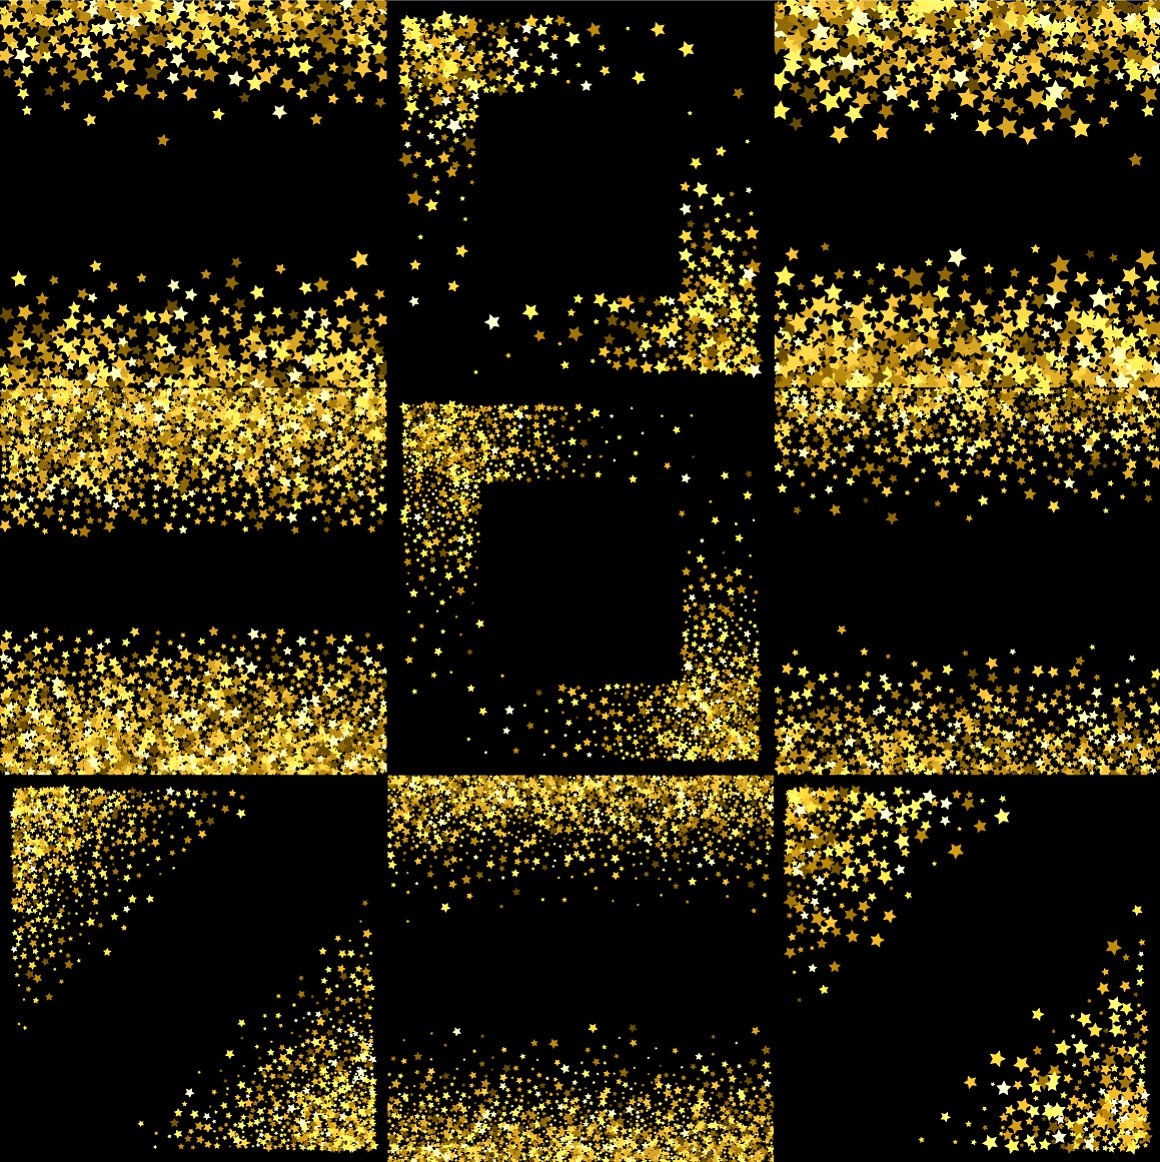 Blossom gold stars on a black background.